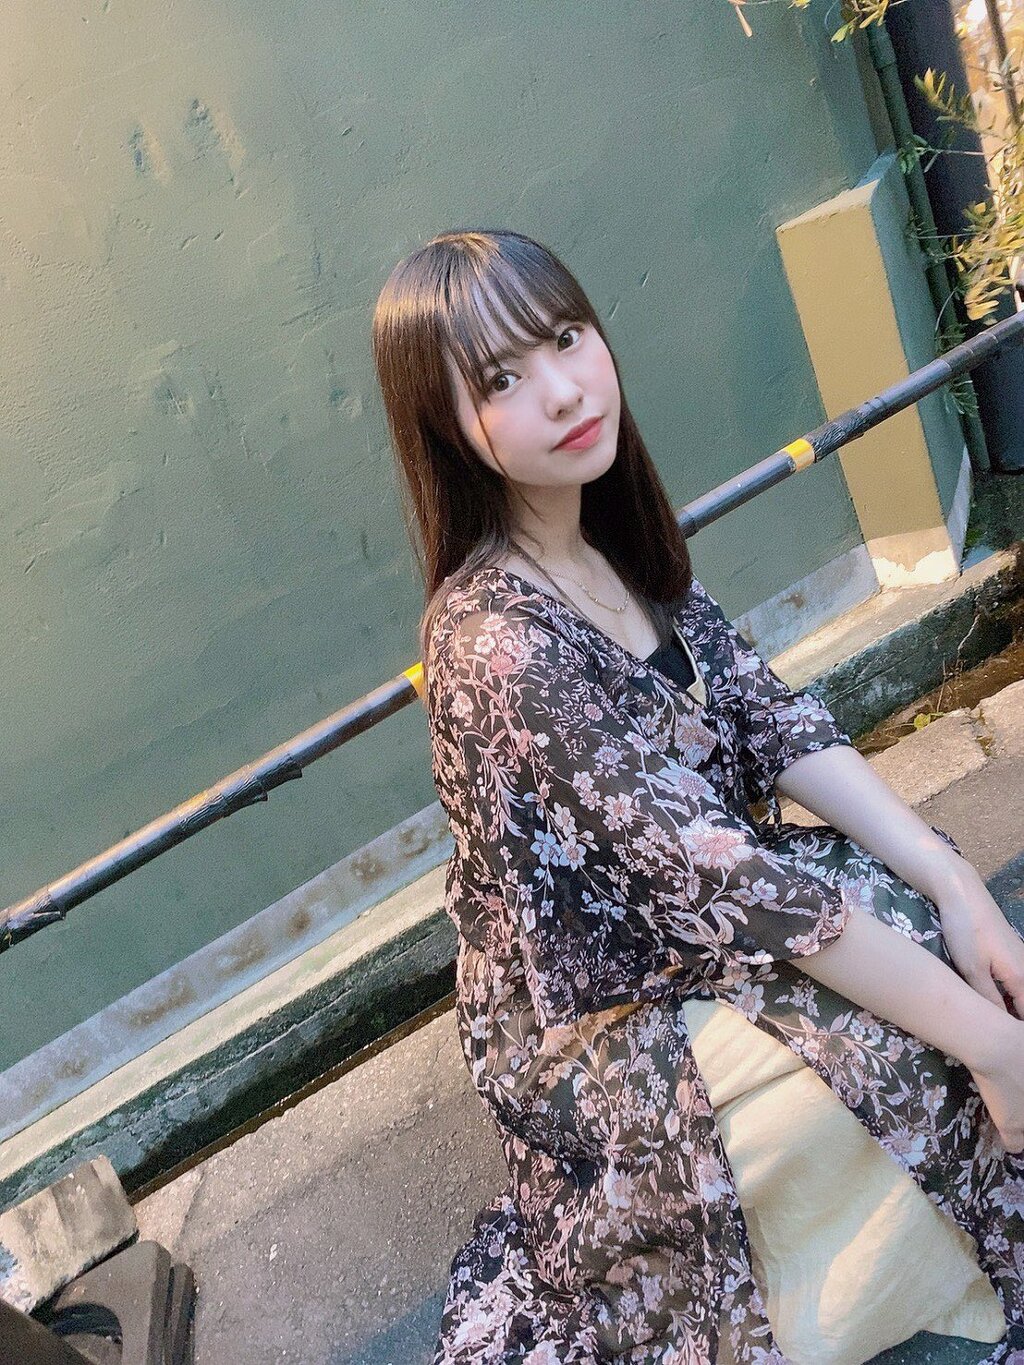 Yuzuha Hongo, a bagel girl born in 2003 in Japan